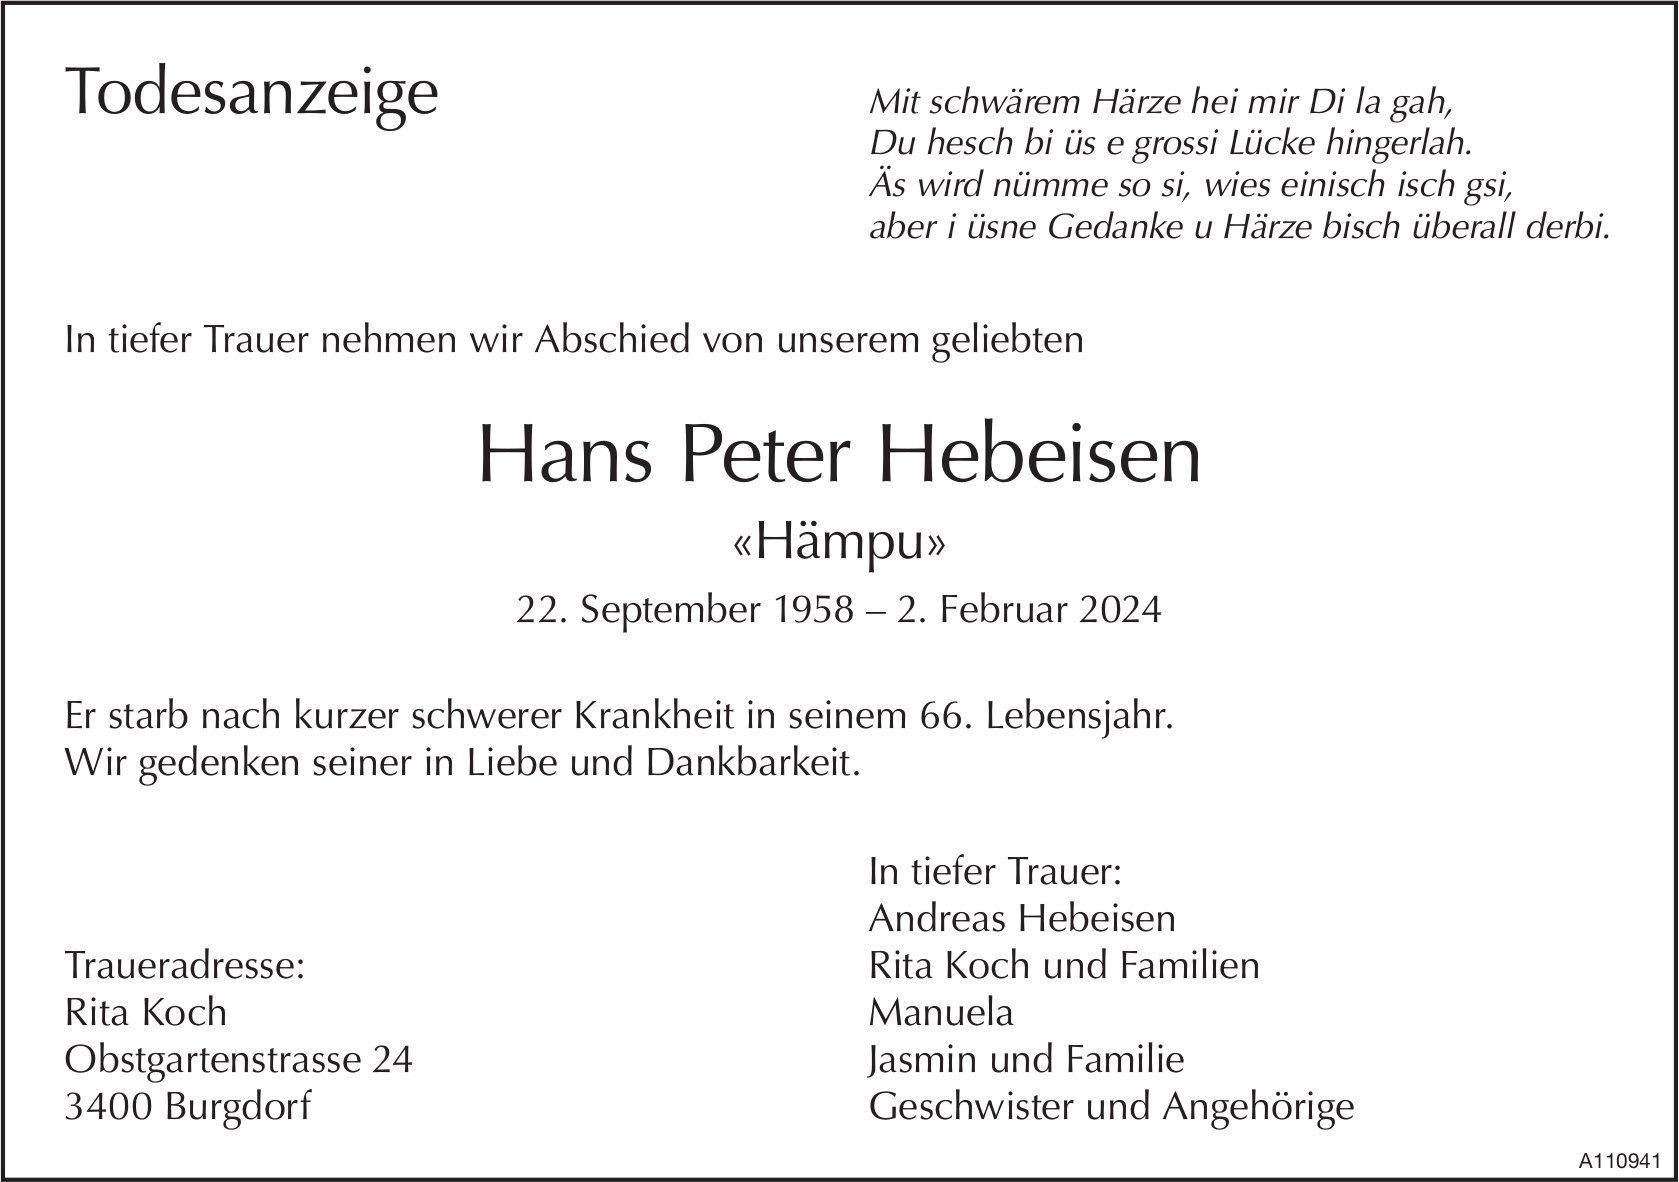 Hans Peter Hebeisen, Februar 2024 / TA